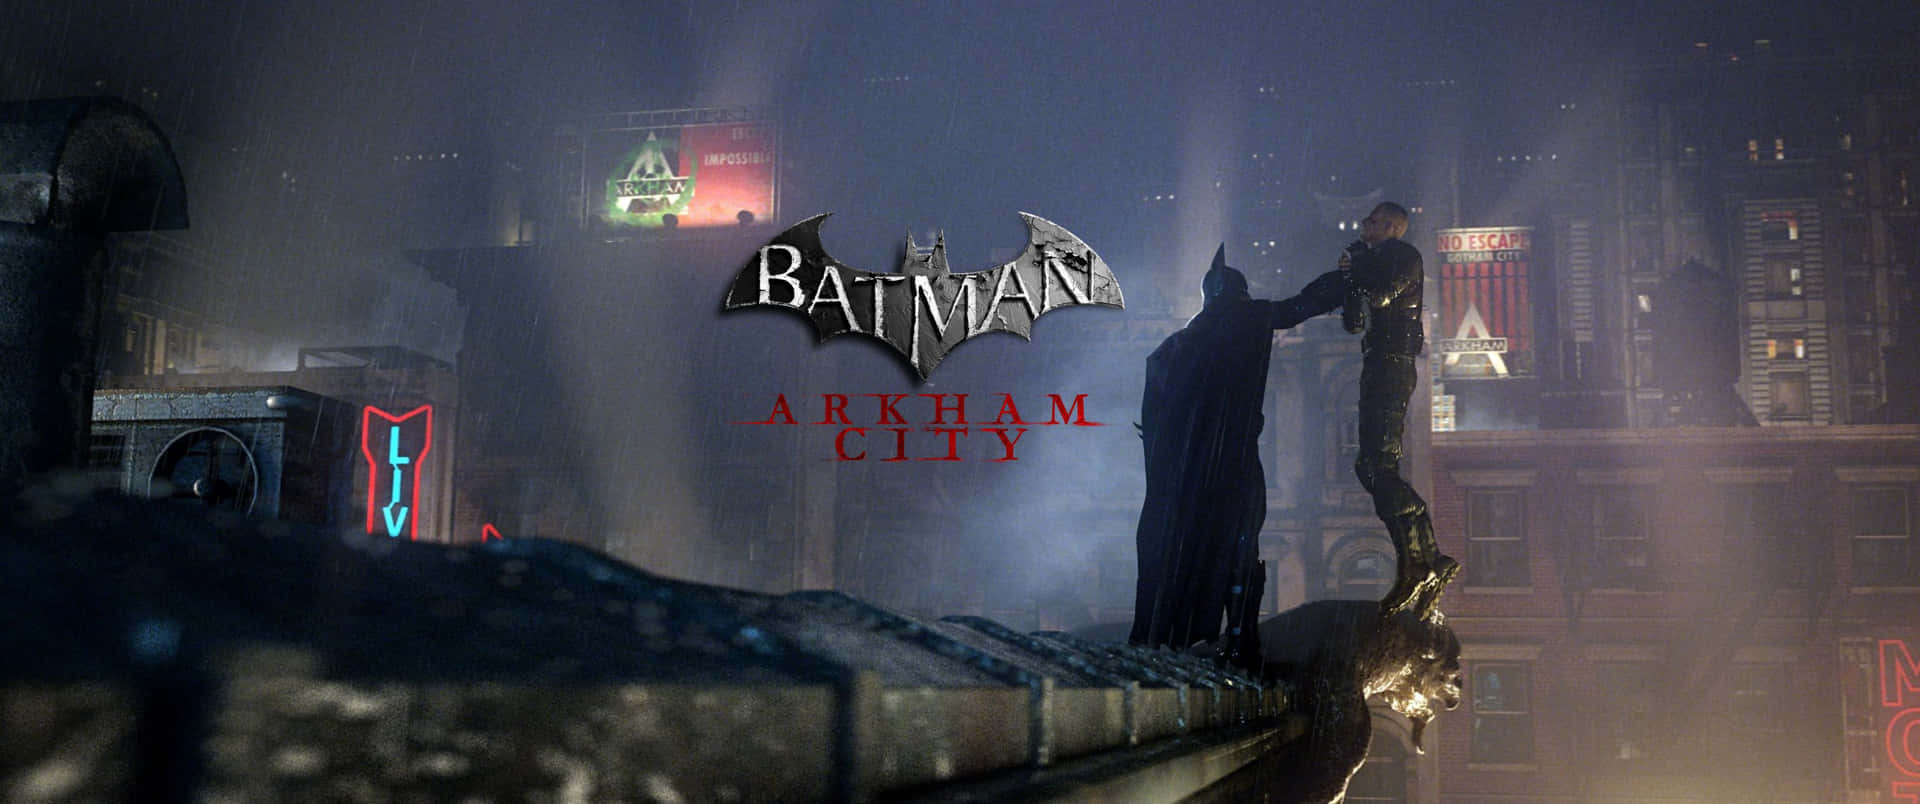 Batman Stands Firm in Arkham City